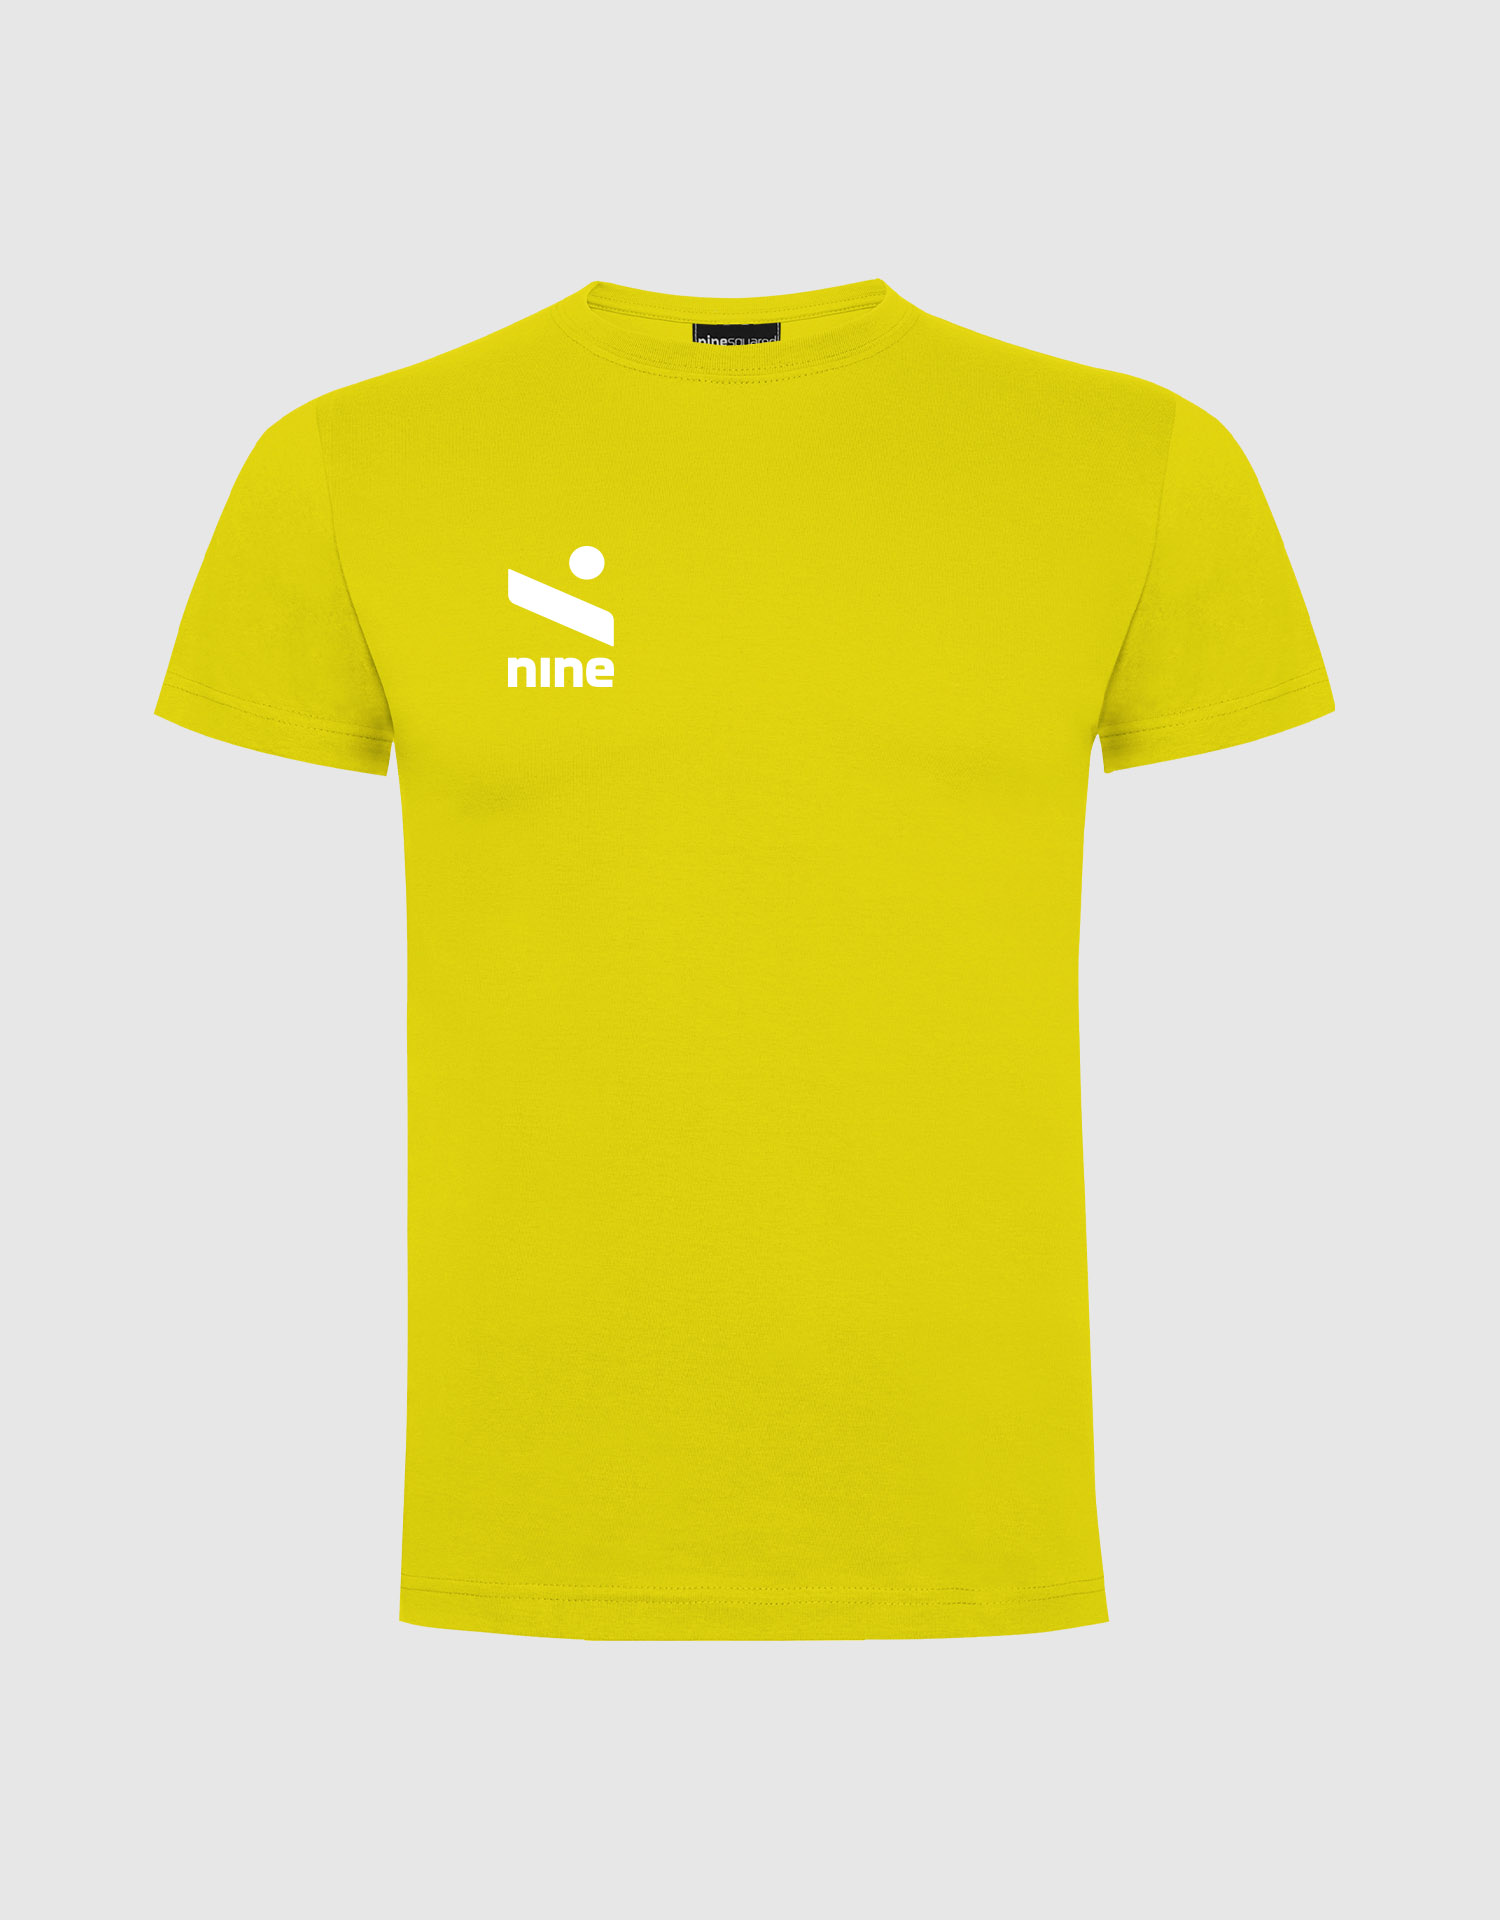 ninesquared-zero2-yellow-fr-U